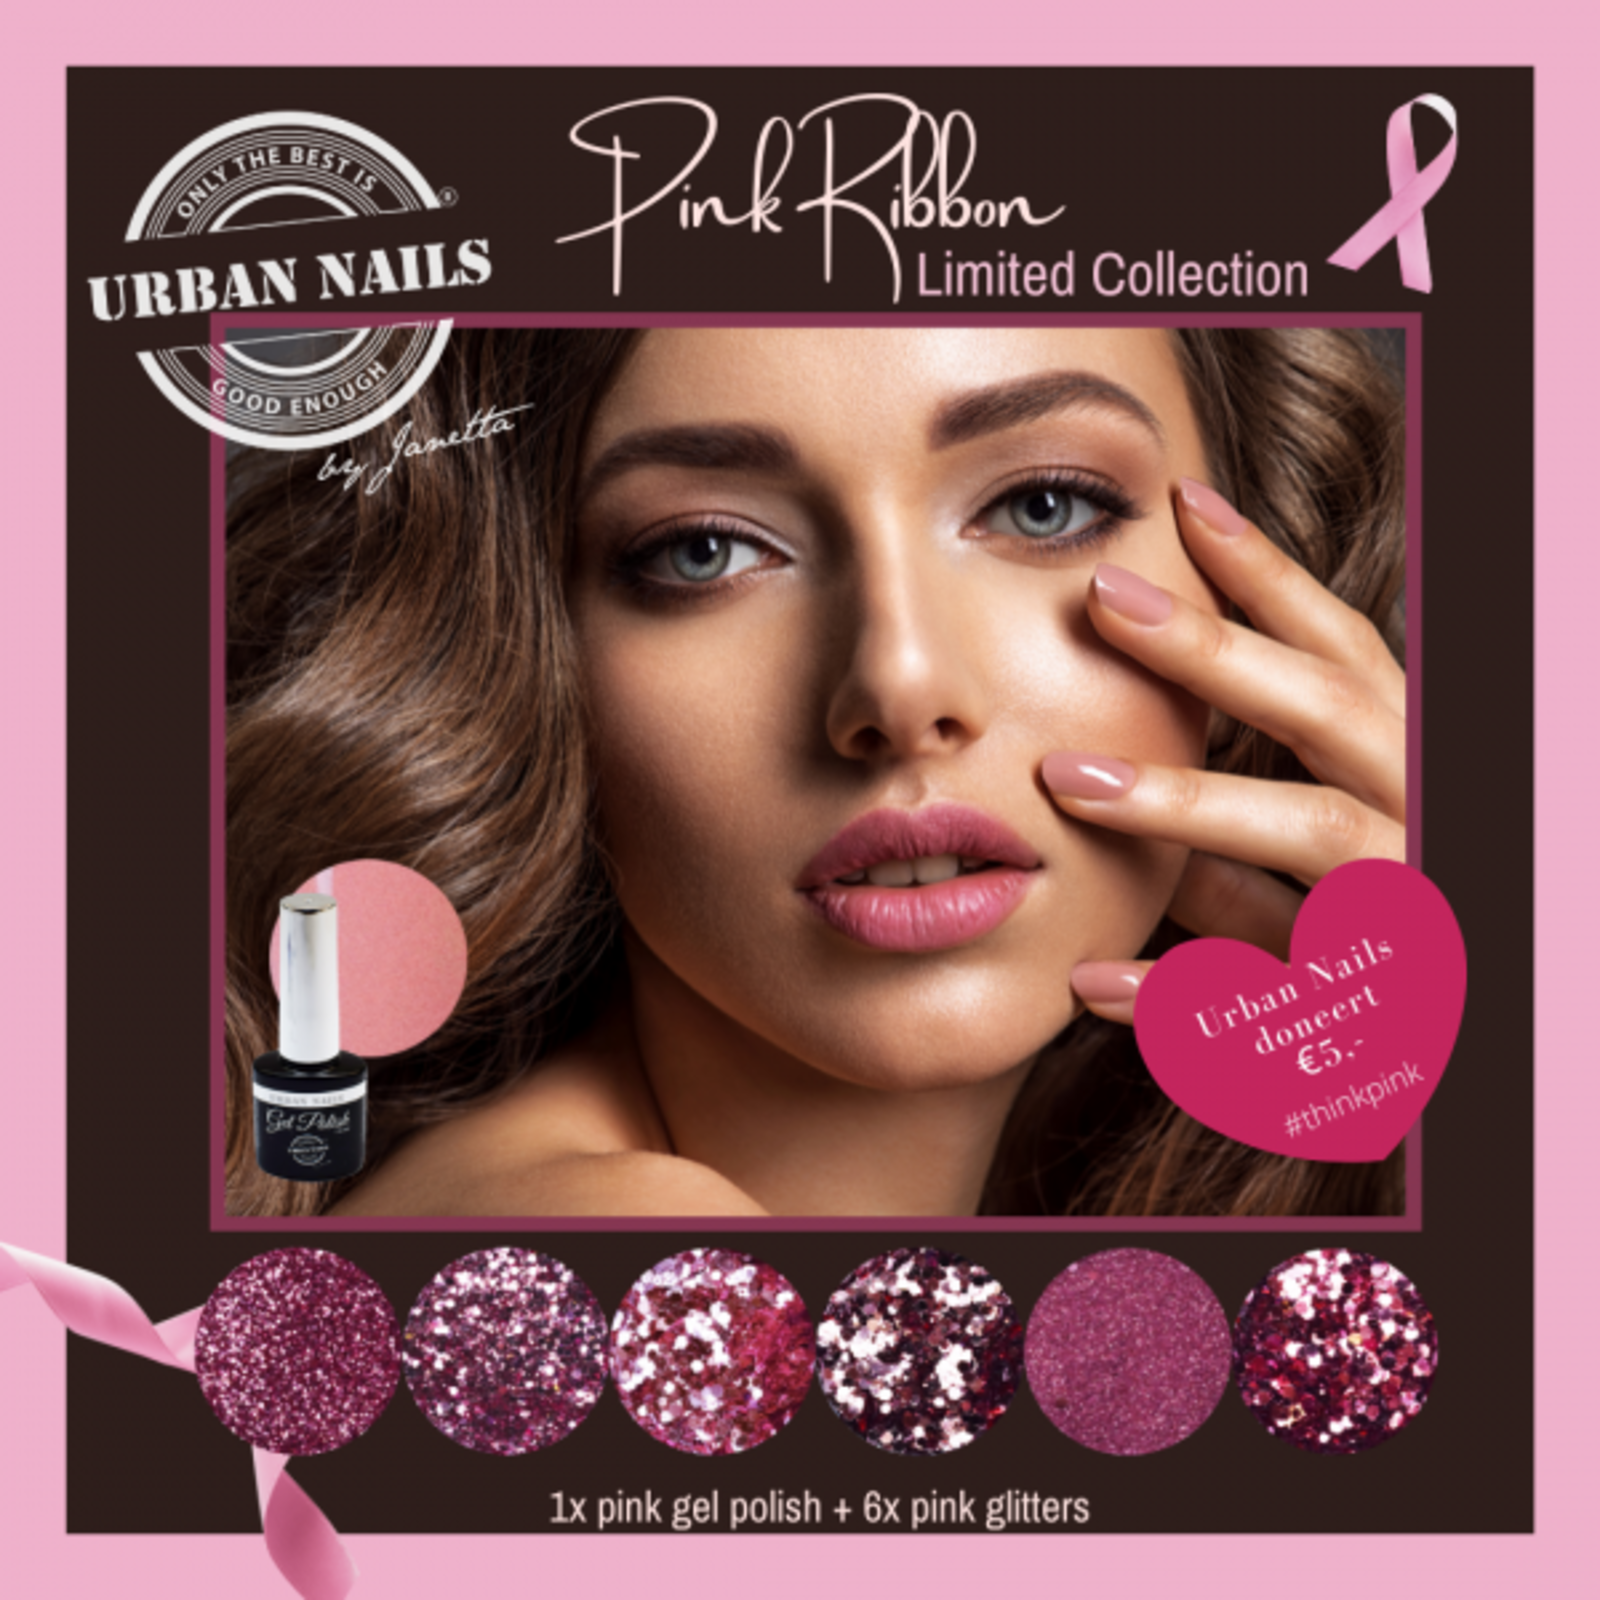 Urban nails pink ribbon glitter collection + gelpolish